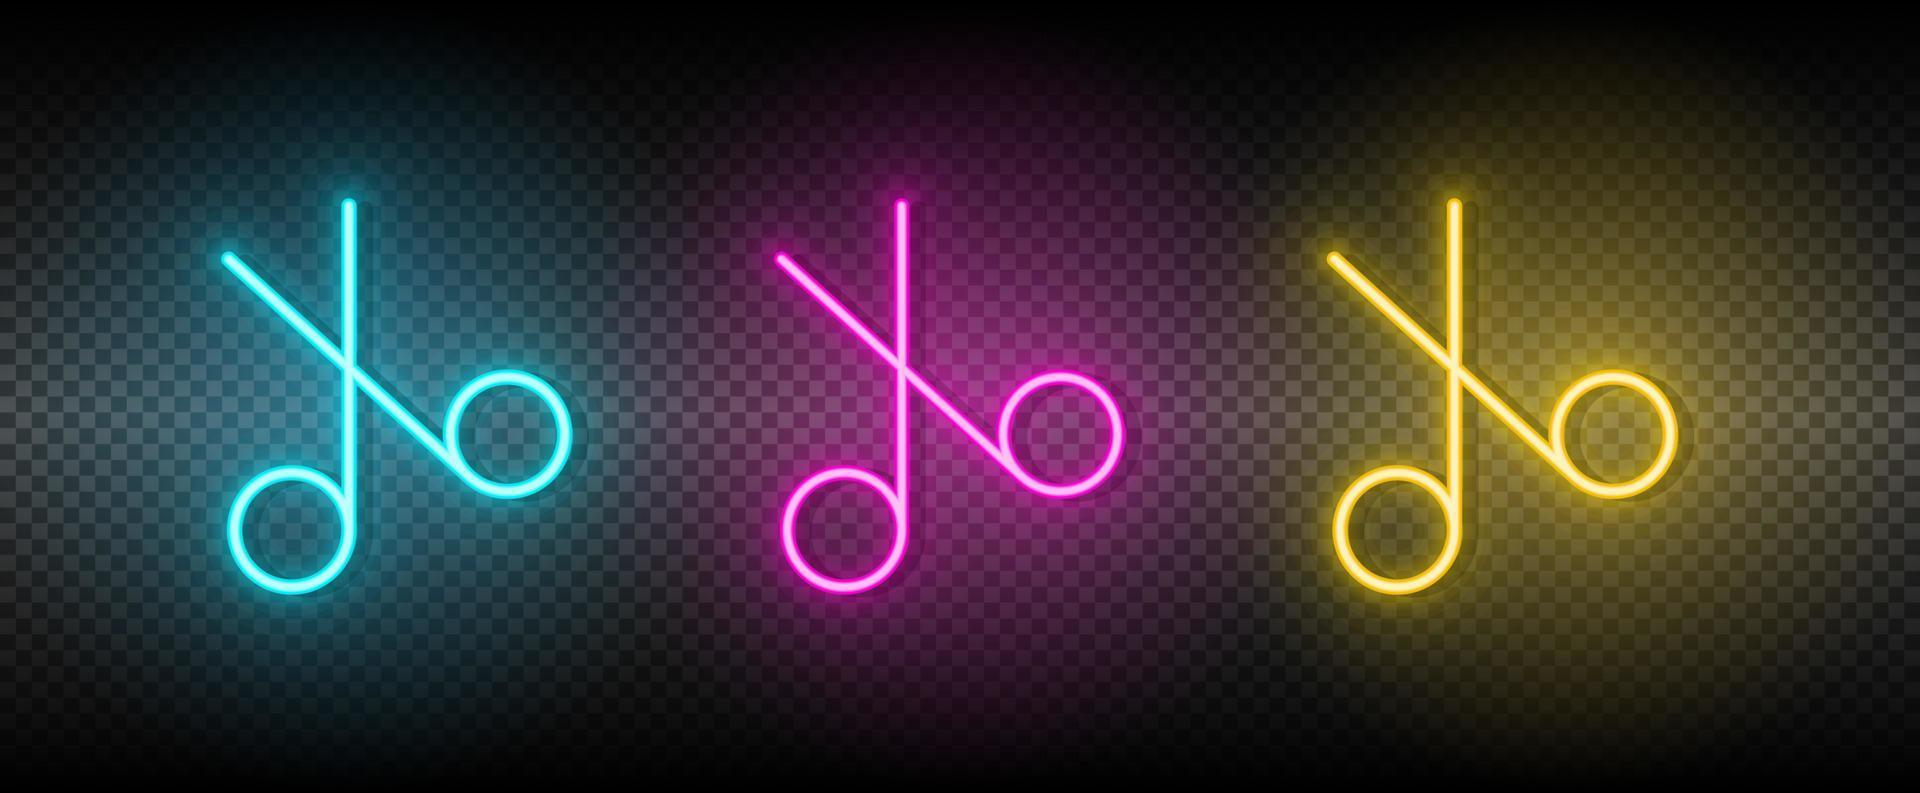 scissors vector icon yellow, pink, blue neon set. Tools vector icon on dark background